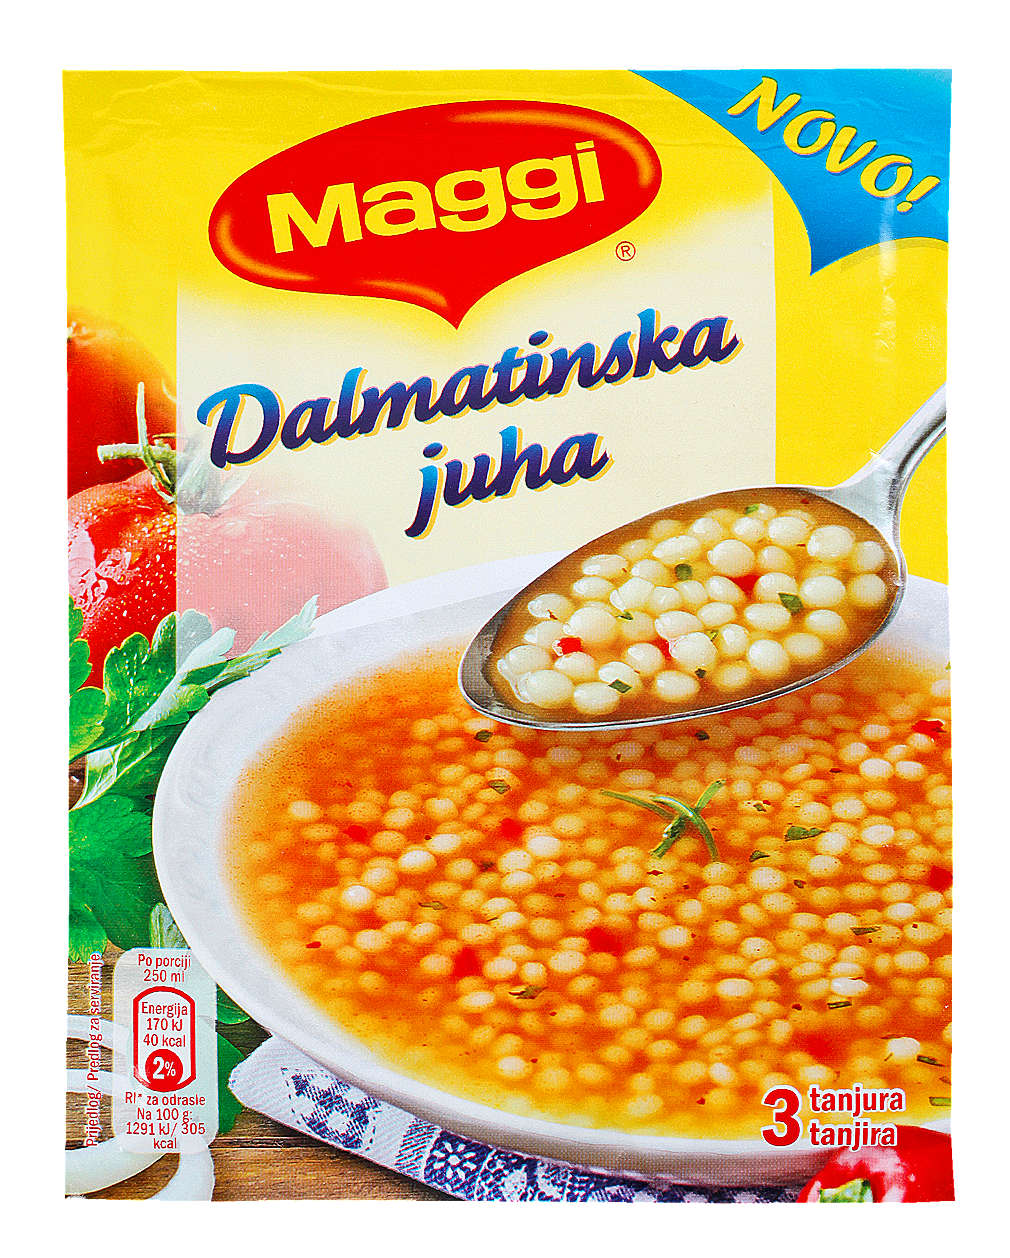 Fotografija ponude Maggi Instant juha dalmatinska